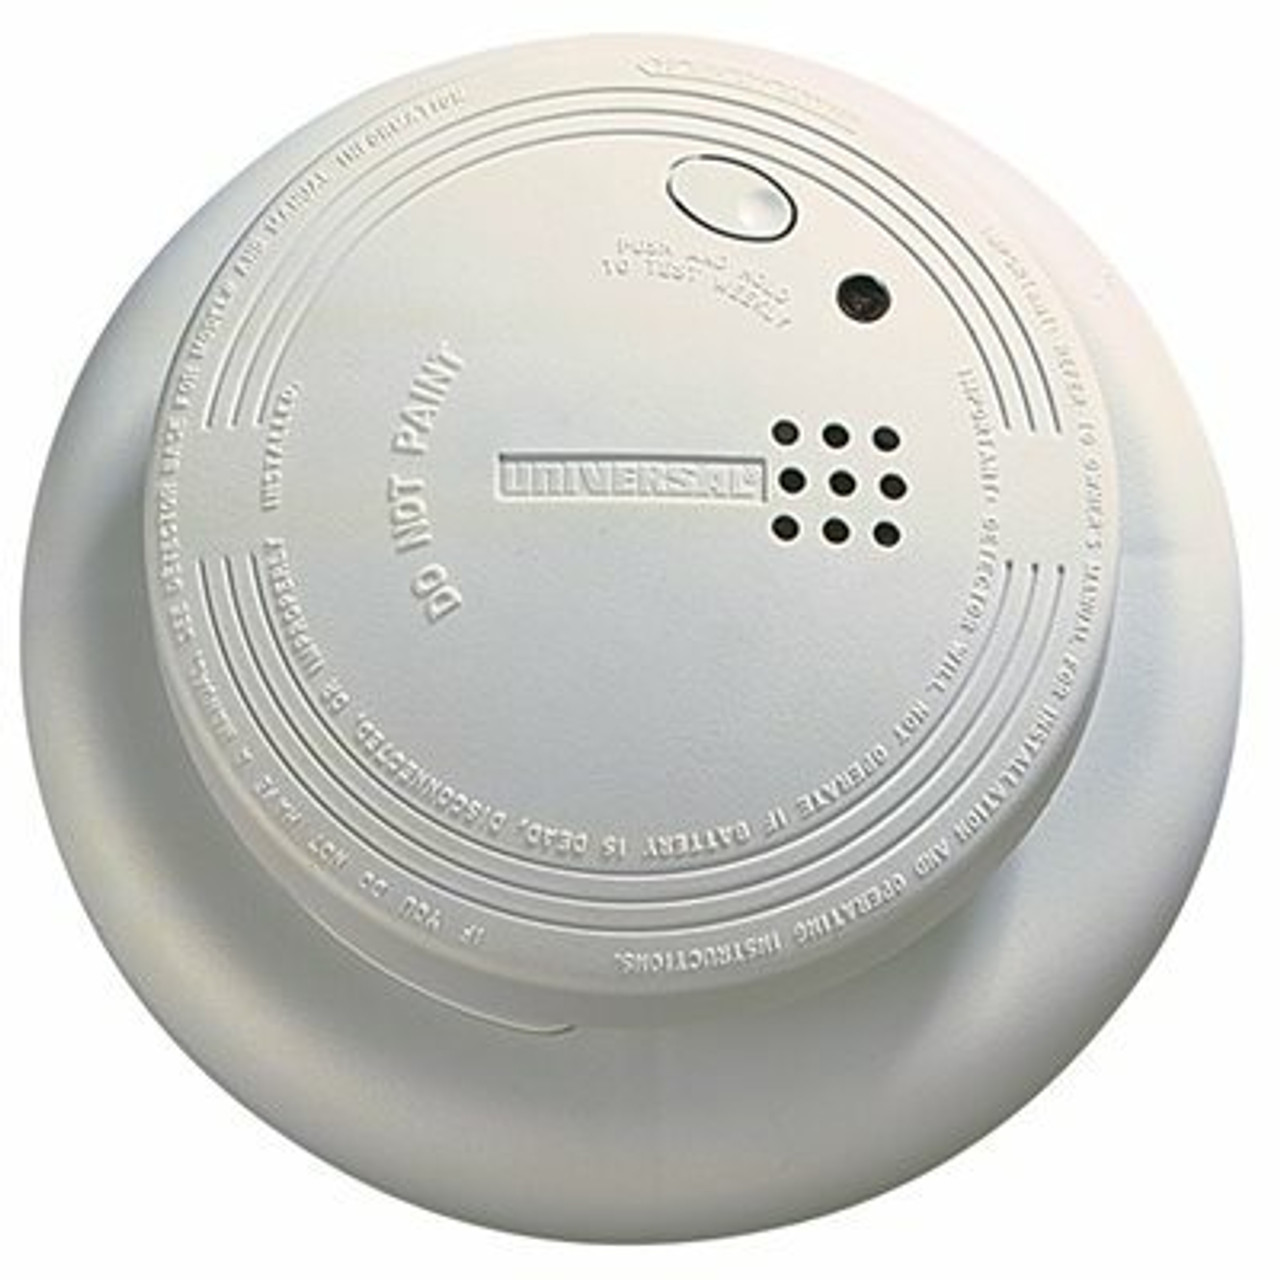 Usi Photelectric Smoke & Fire Alarm Dc 9 Volt